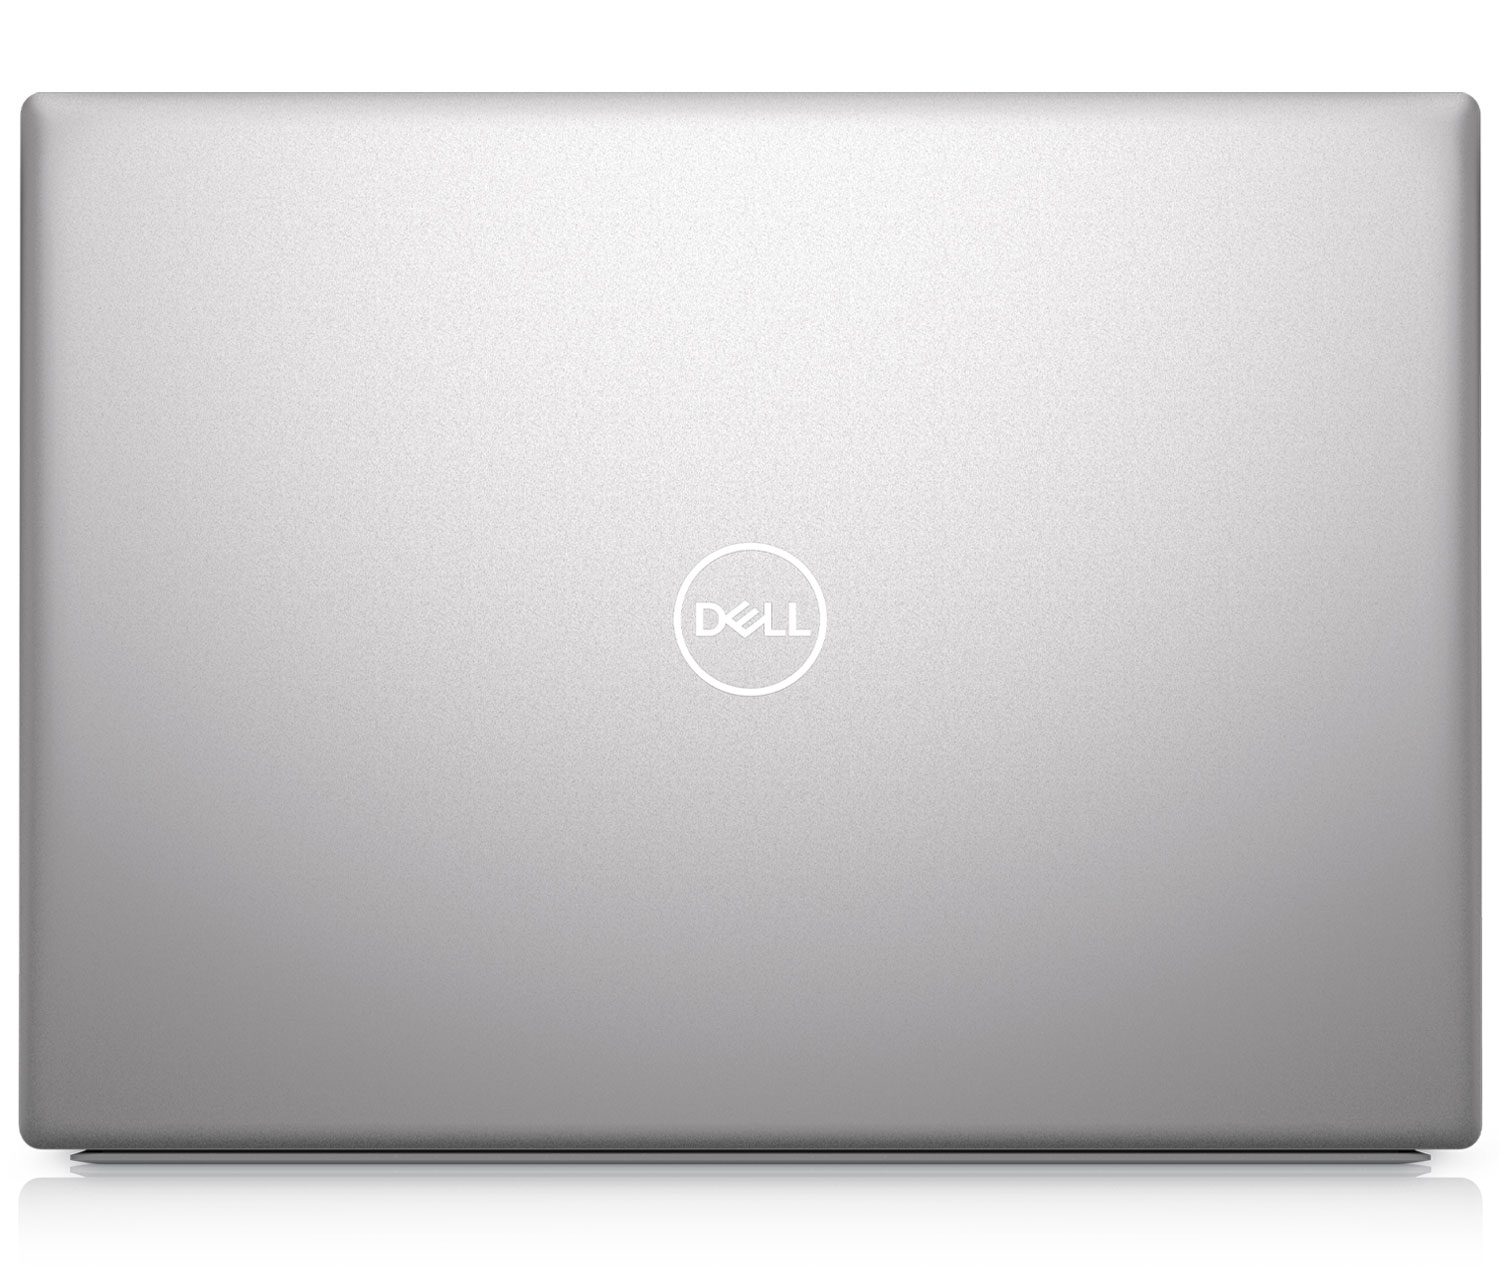 Buy Dell Inspiron 14 5420 12th Gen Core i7 laptop at Evetech.co.za